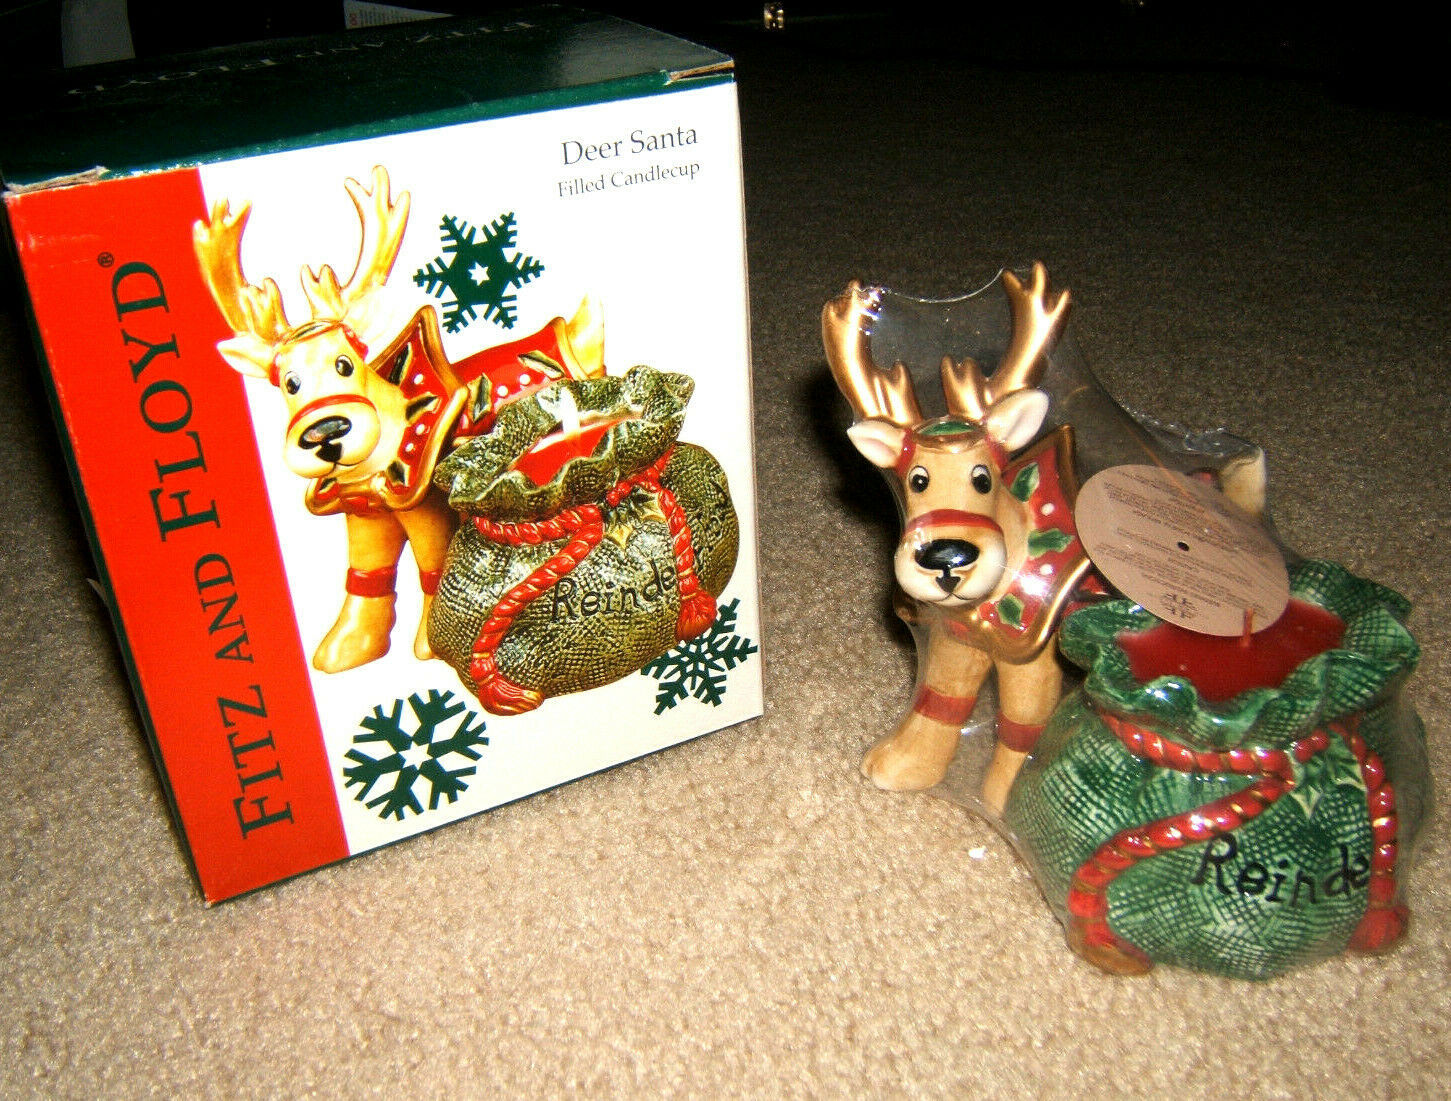 Fitz and Floyd Deer Santa Filled Candlecup Christmas Reindeer Candle - $14.99